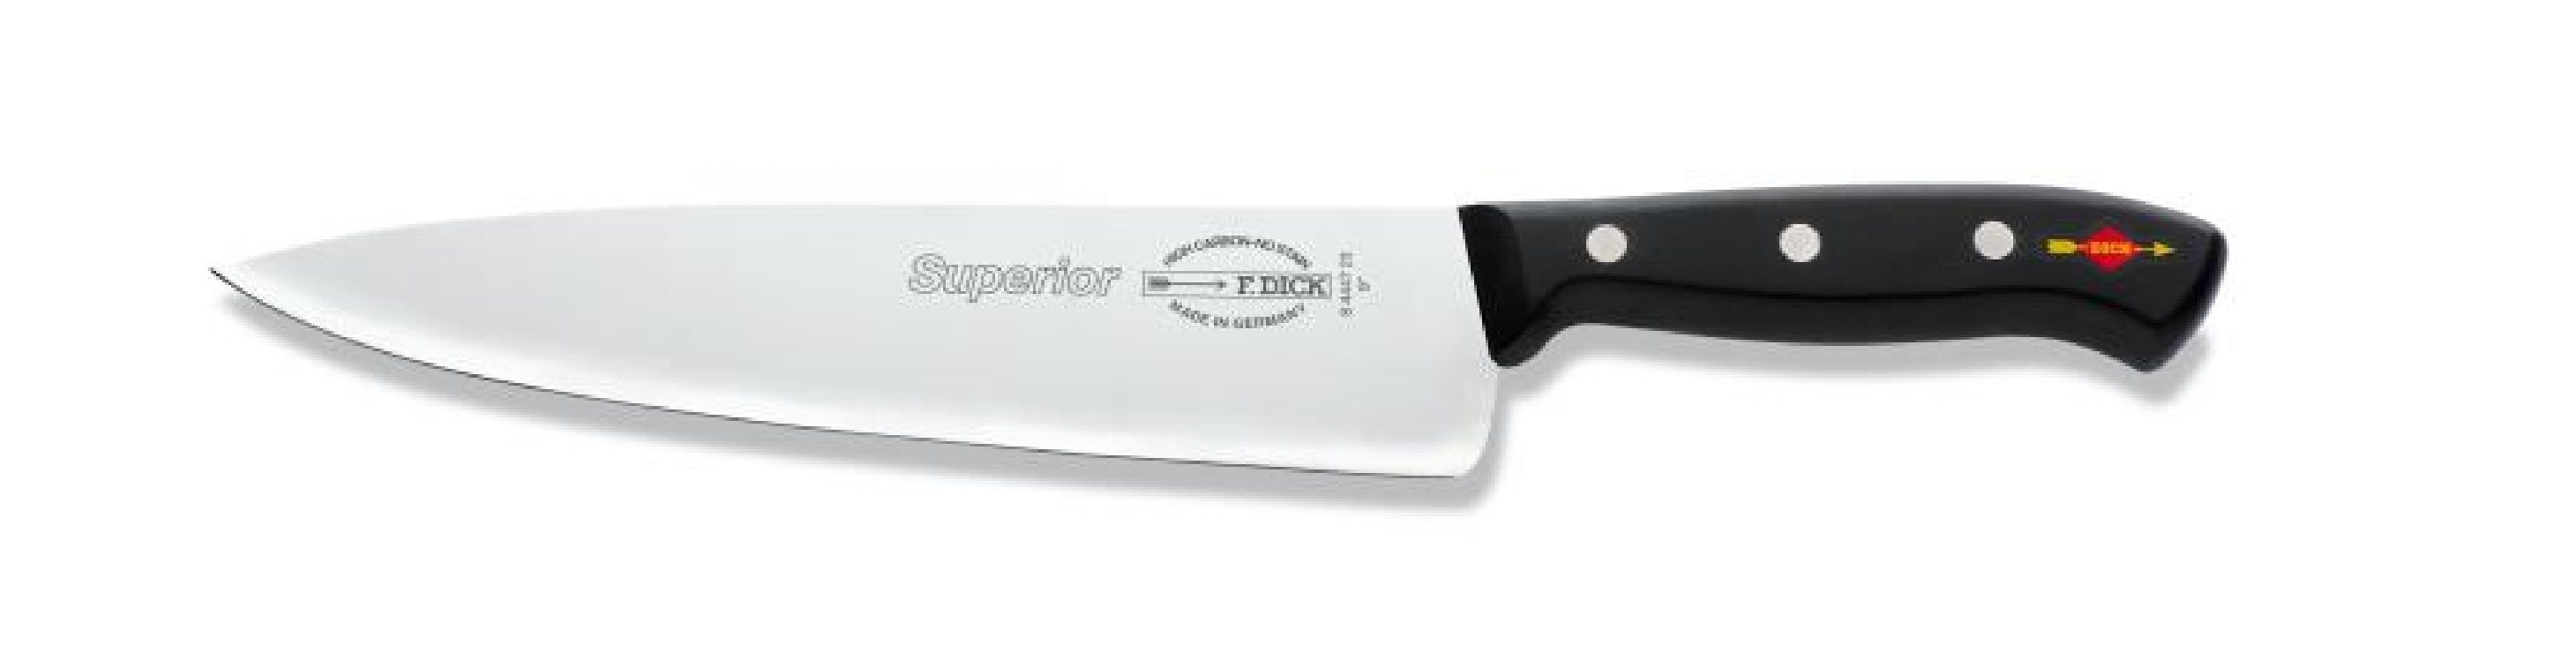 Dick Kochmesser Dick Kochmesser 8444723 Superior Messer 23 cm Klinge Küchenmesser